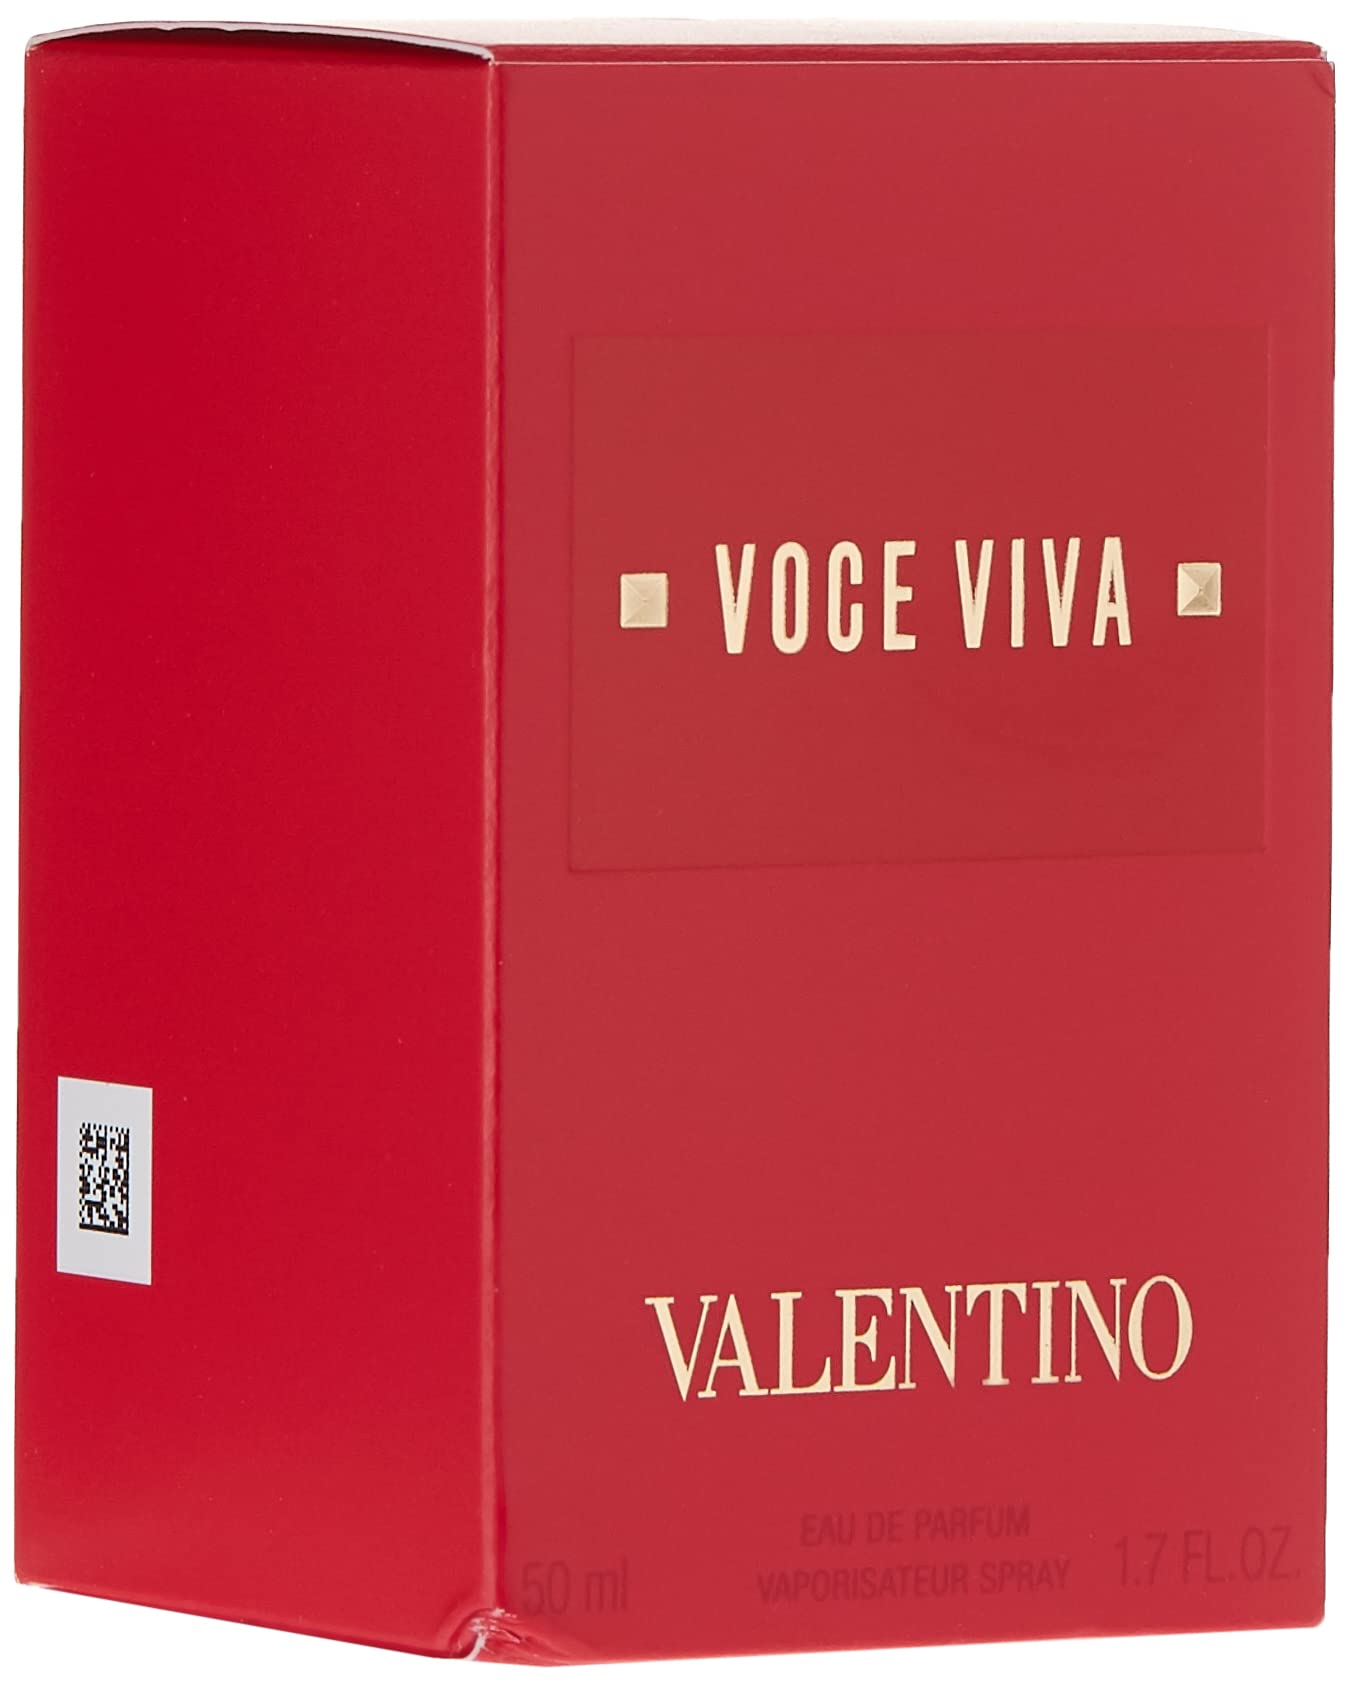 Valentino Voce Viva EDP Spray Women 1.7 oz